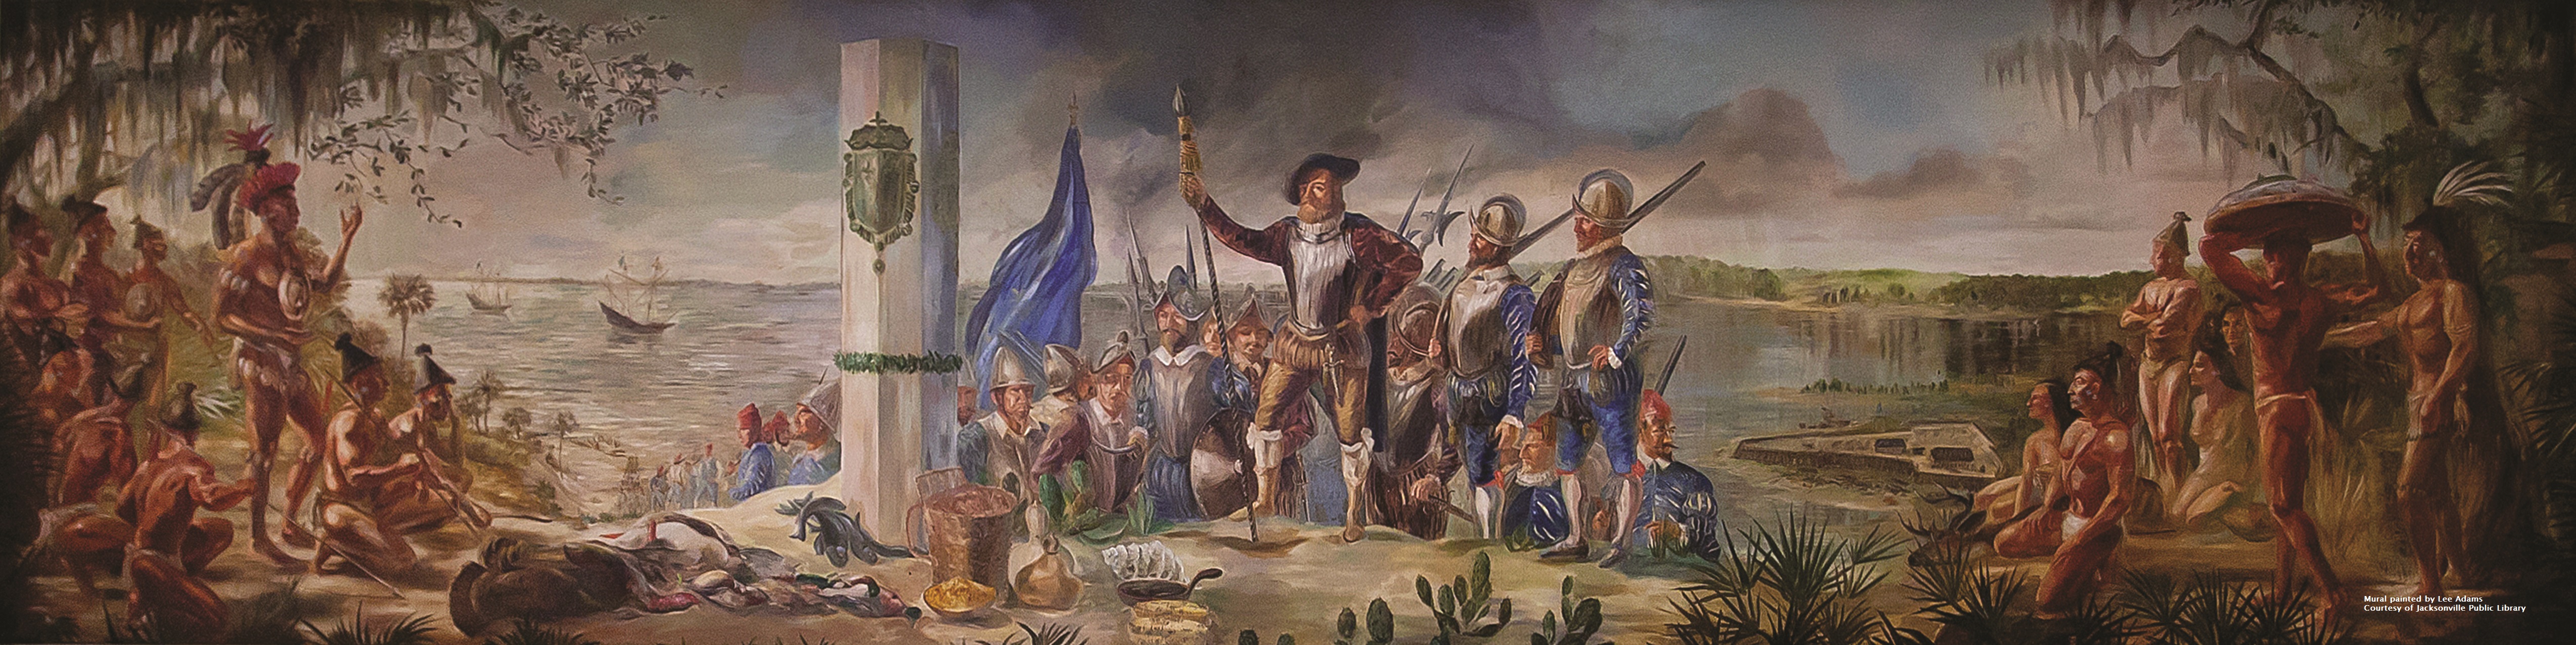 Потомок колонистов. Колонизация Америки Колумб. Колонизация Северной Америки испанцами. Колонисты Северной Америки 17 век. Колонизация 17 век.